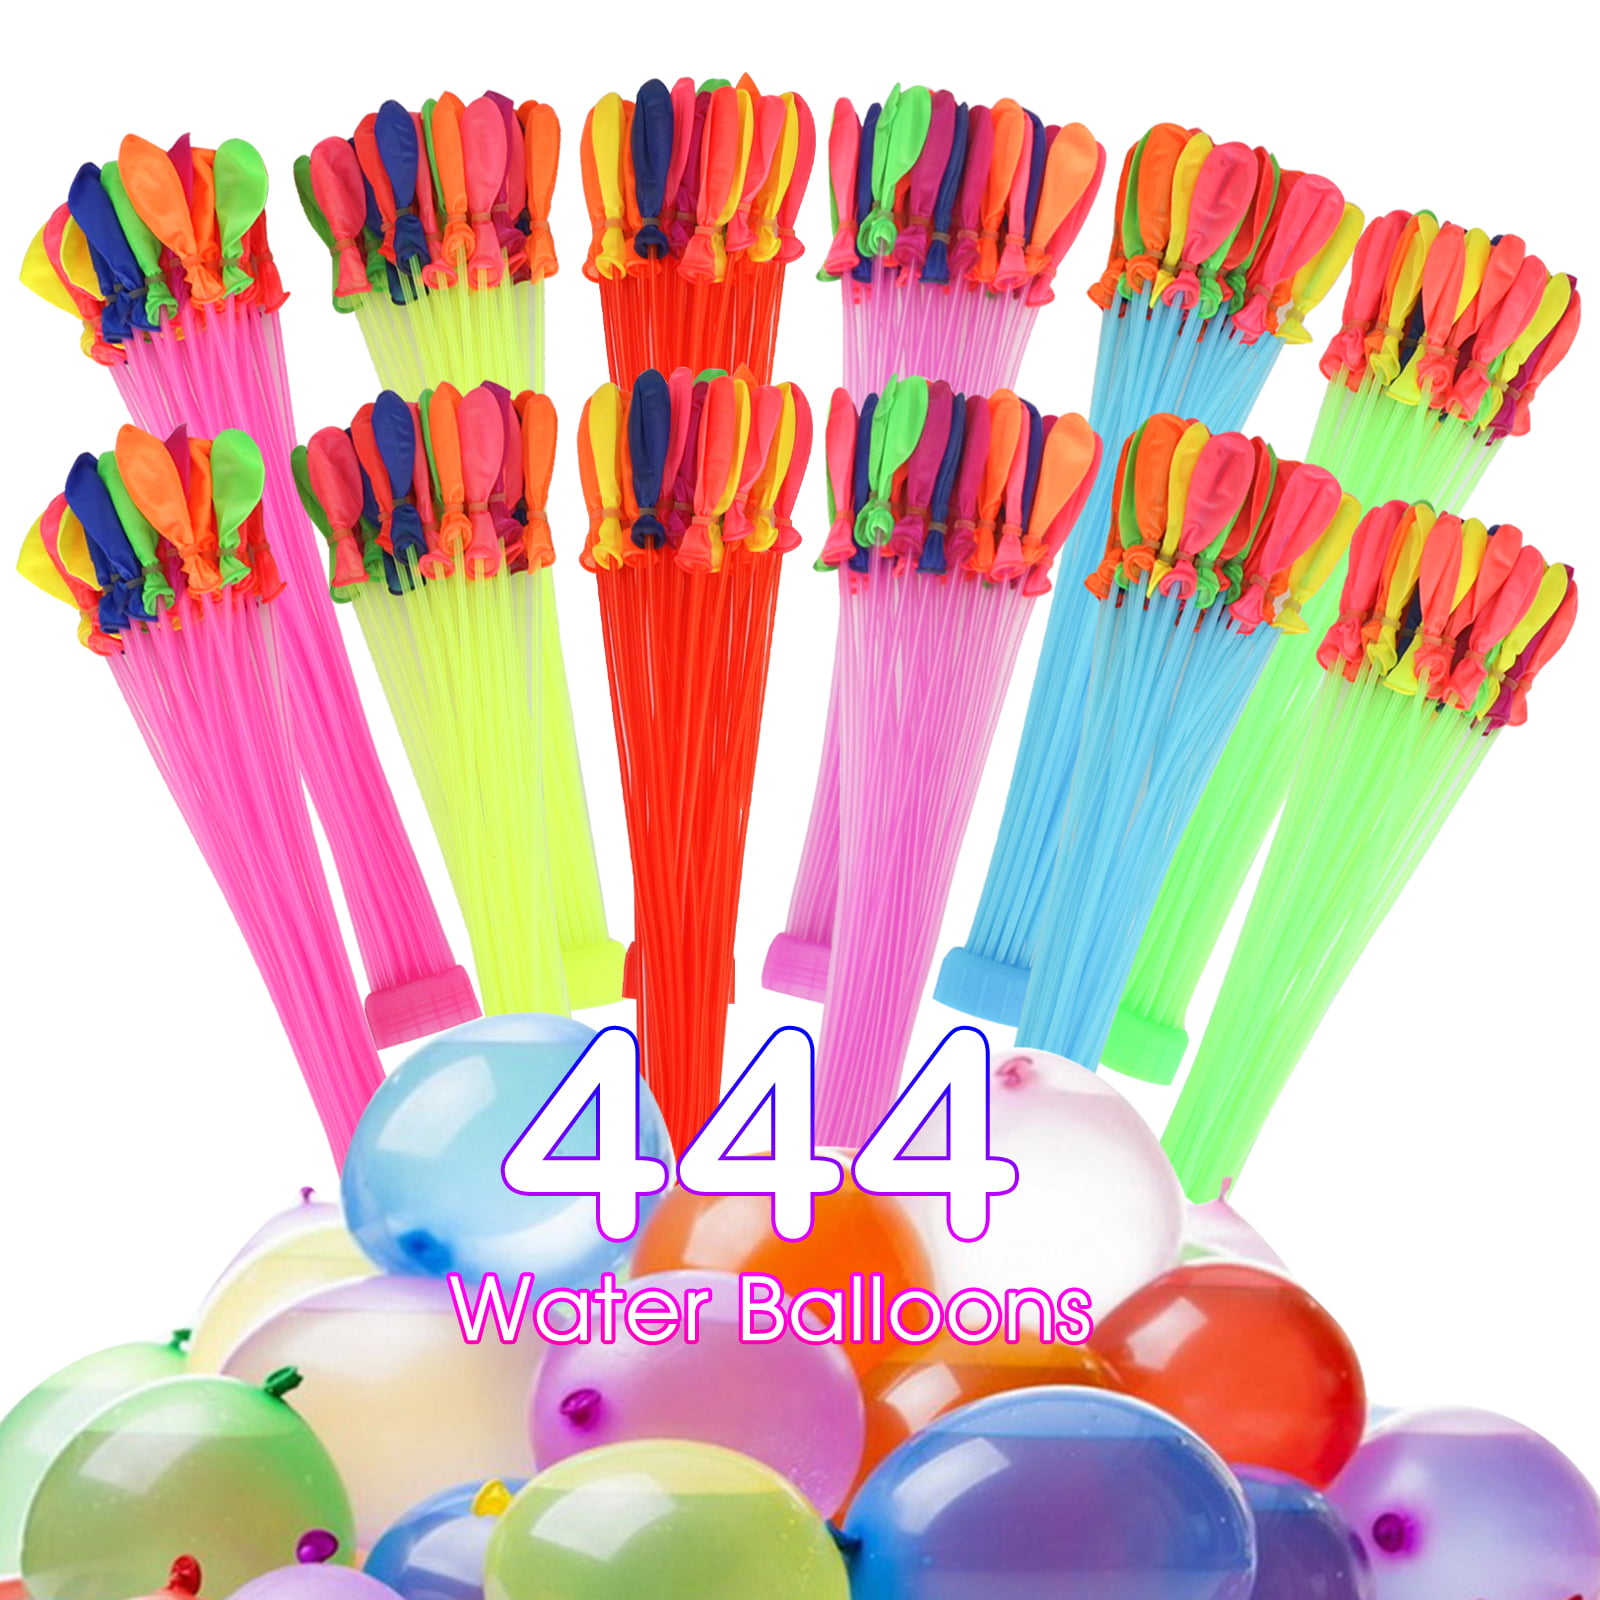 Including Filler Garden 250 Water Balloons Bombs Kids Summer Party Fun Toys 